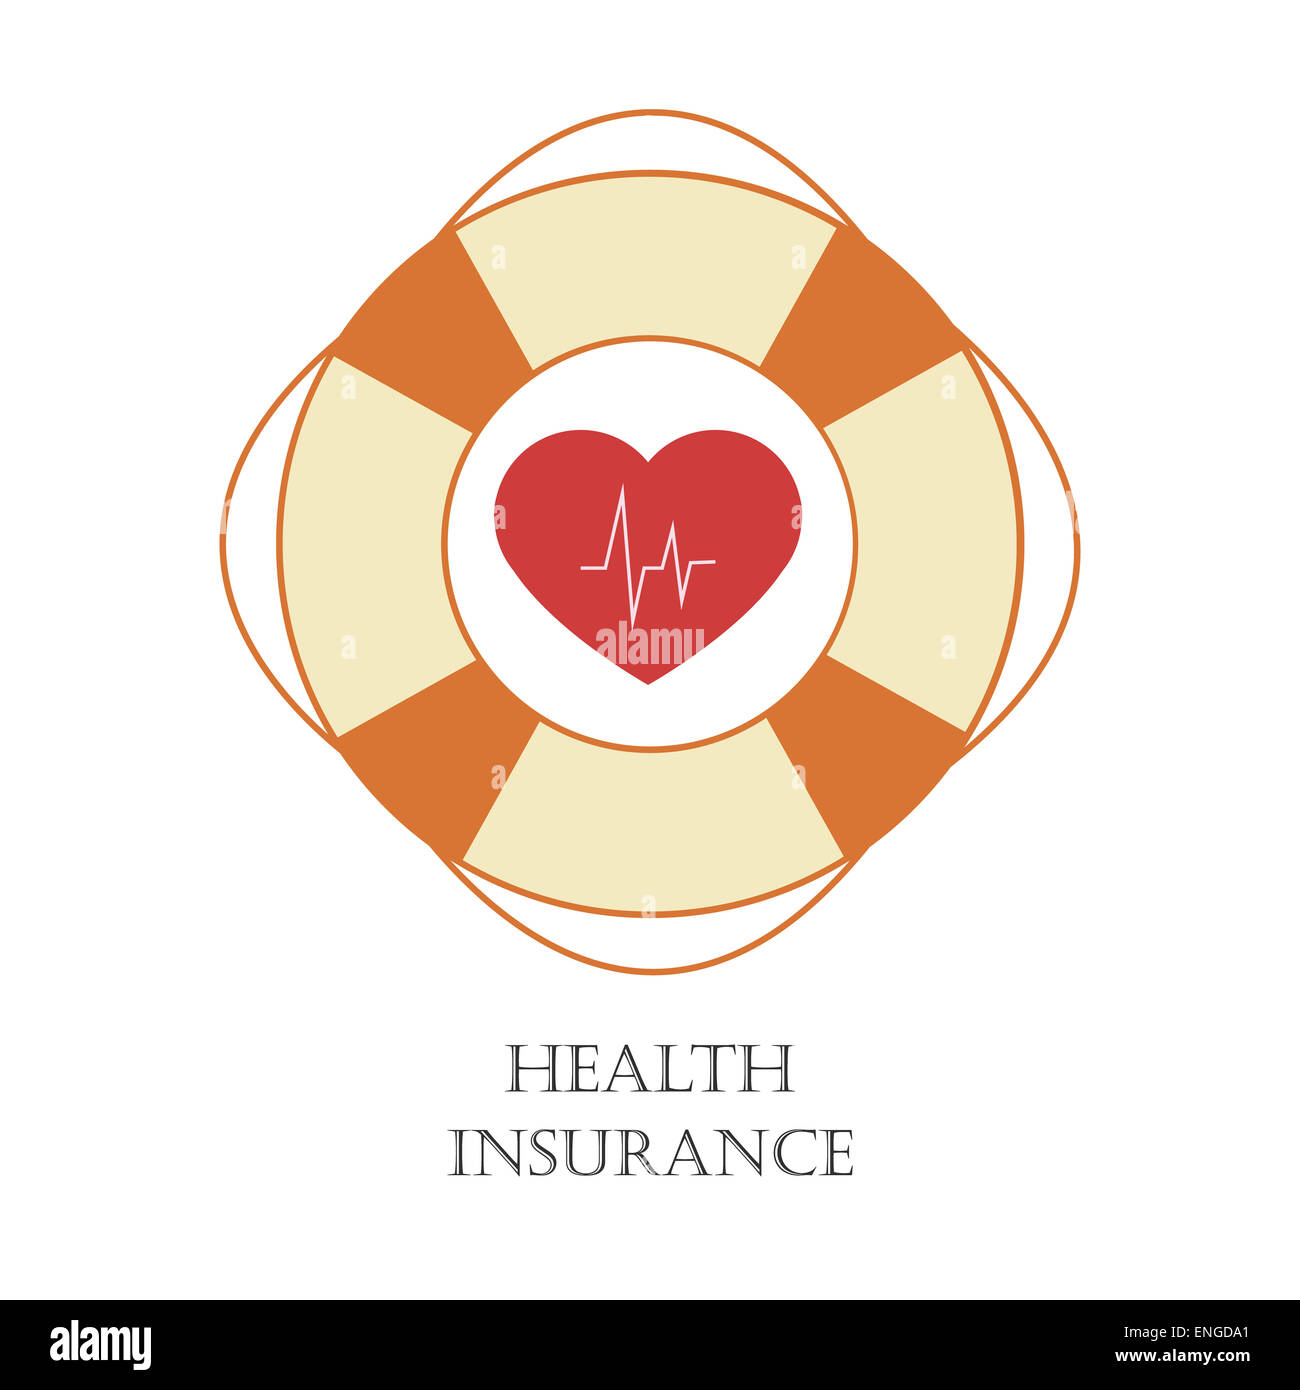 Health insurance sign Stock Photo